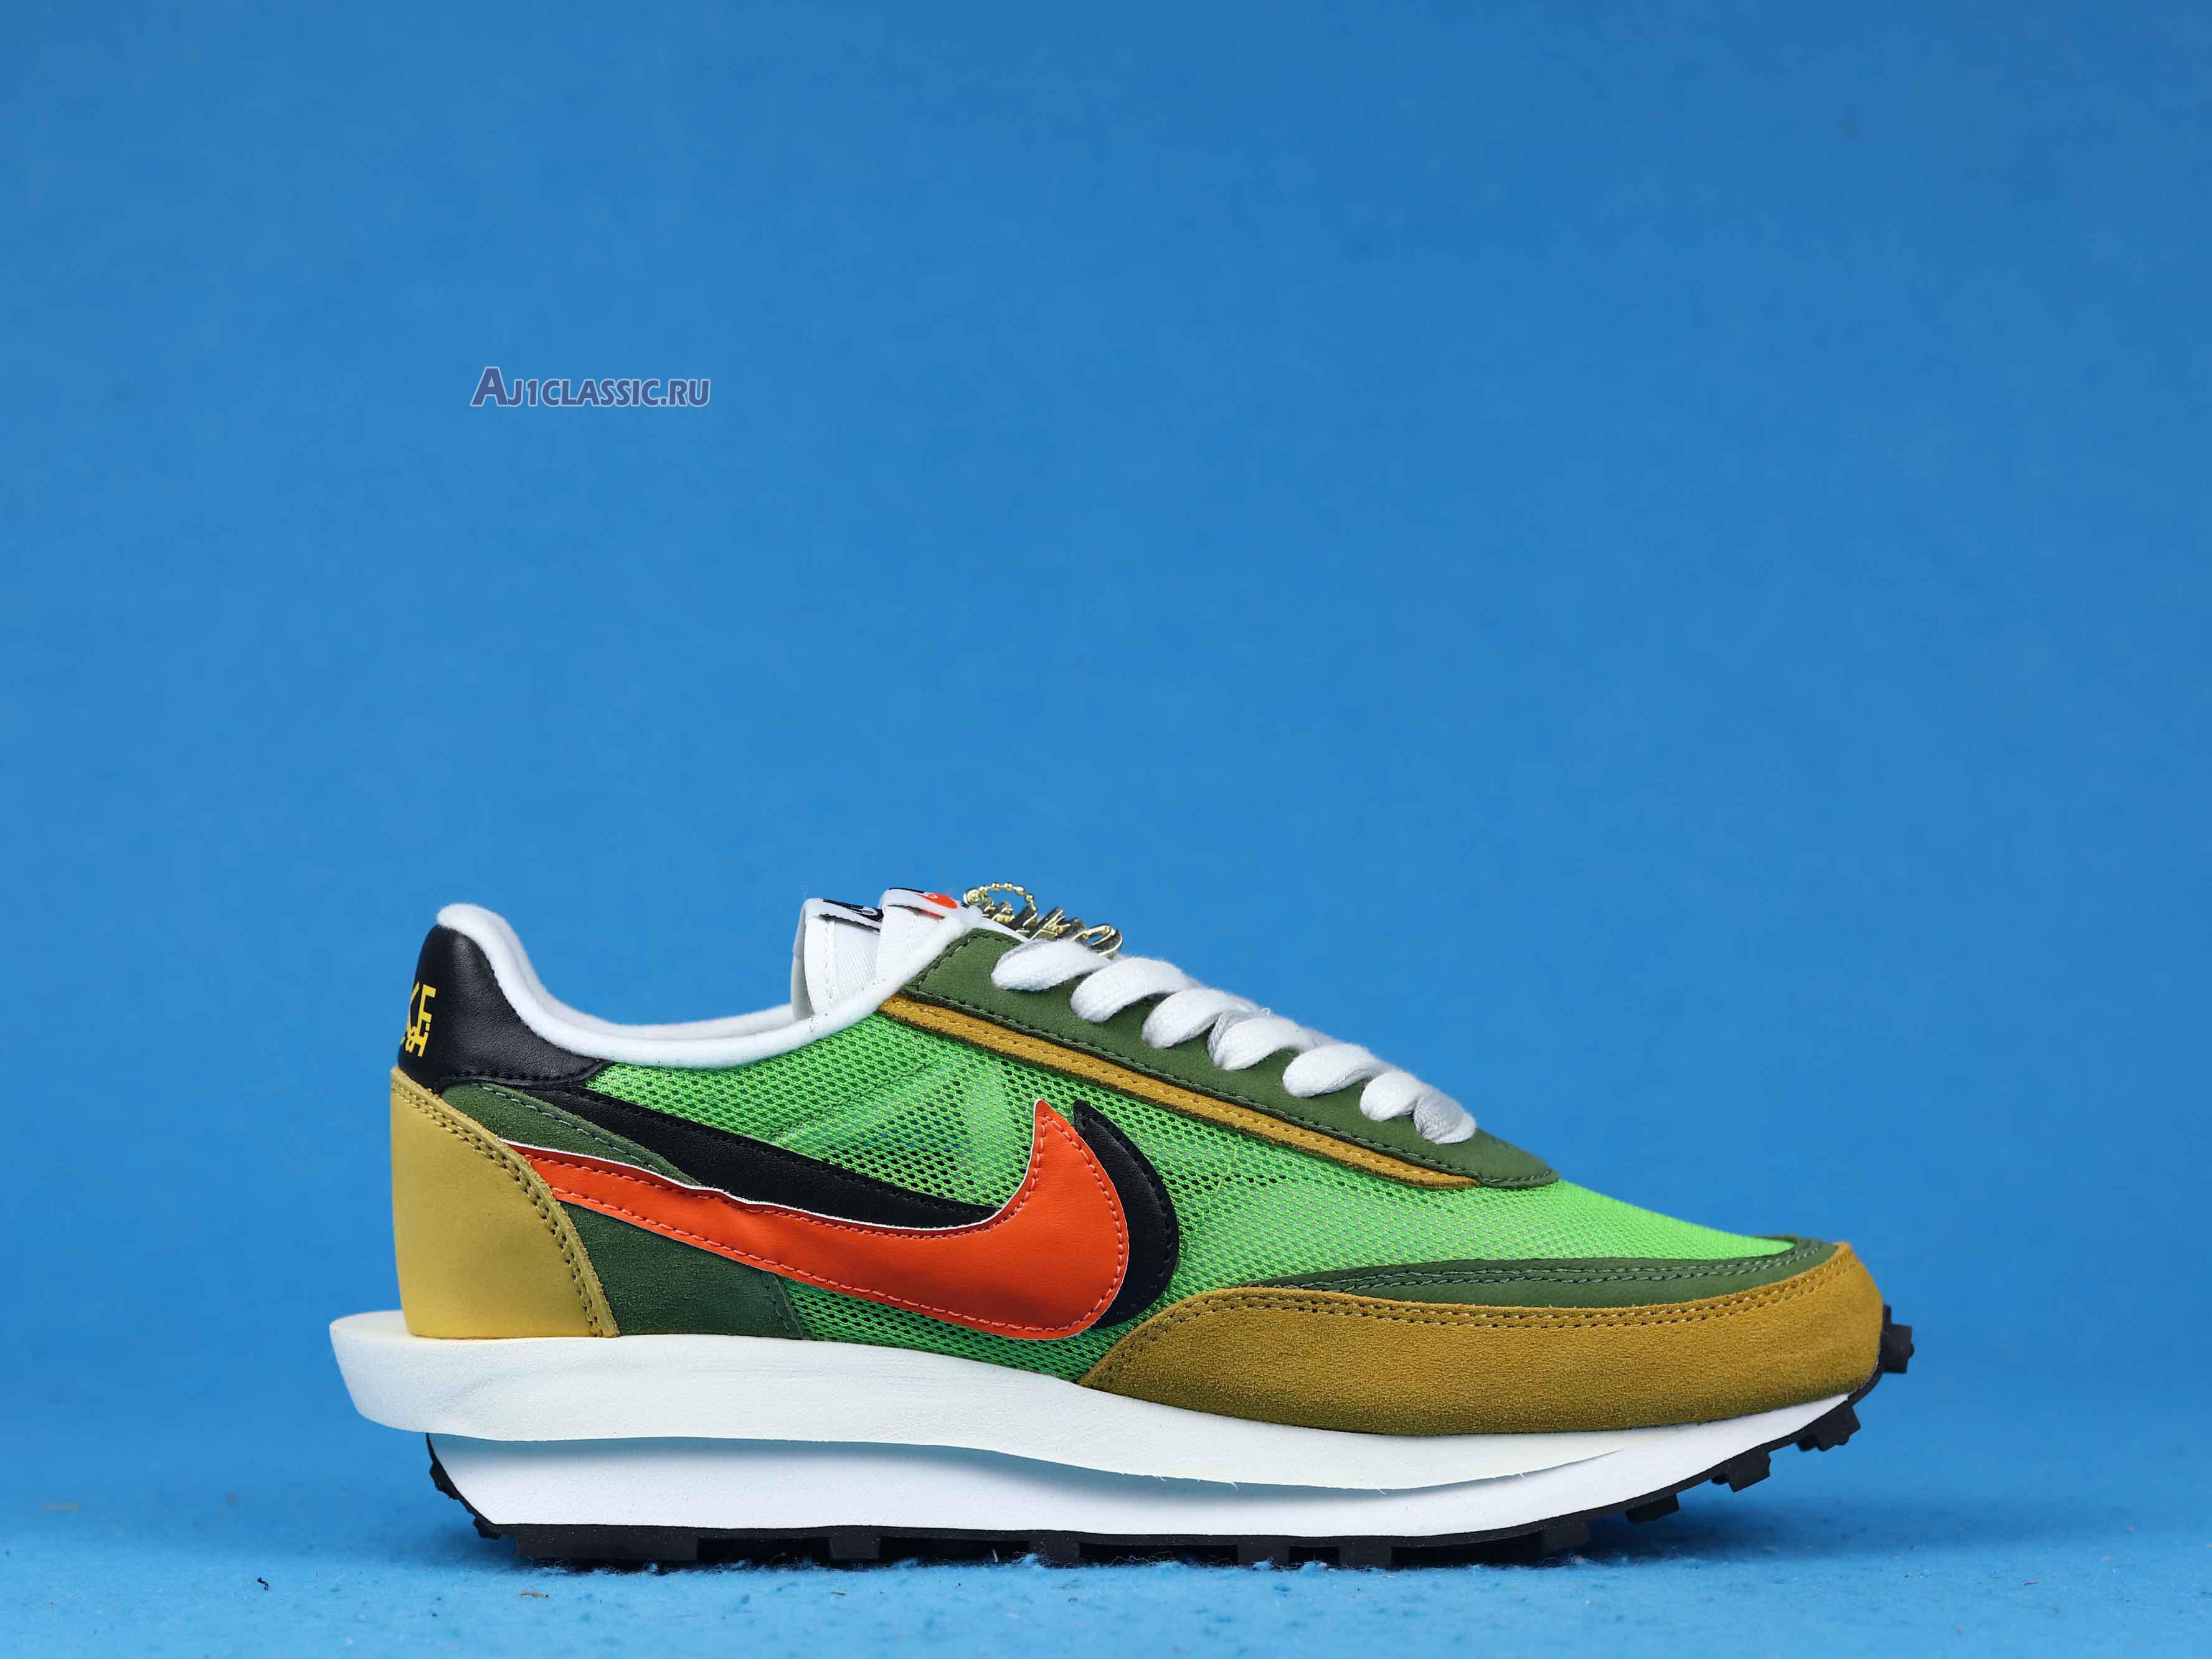 Sacai x Nike LDWaffle "Green Gusto" BV0073-300